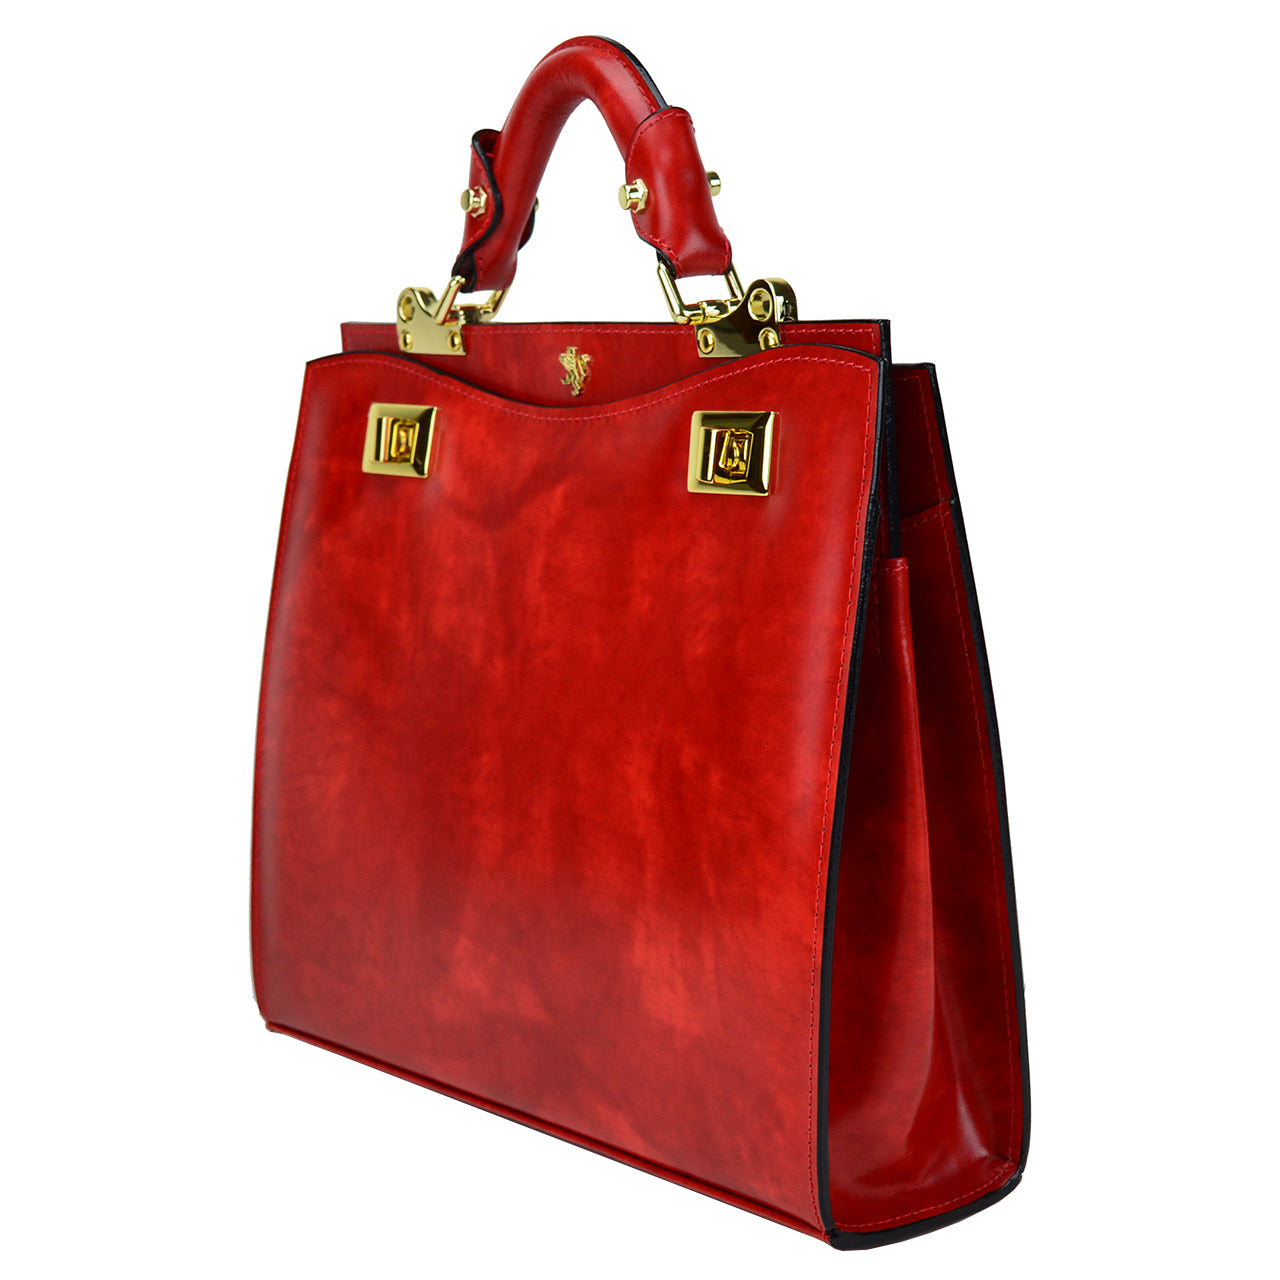 Pratesi Anna Maria Luisa de' Medici Medium Lady Bag in genuine Italian leather